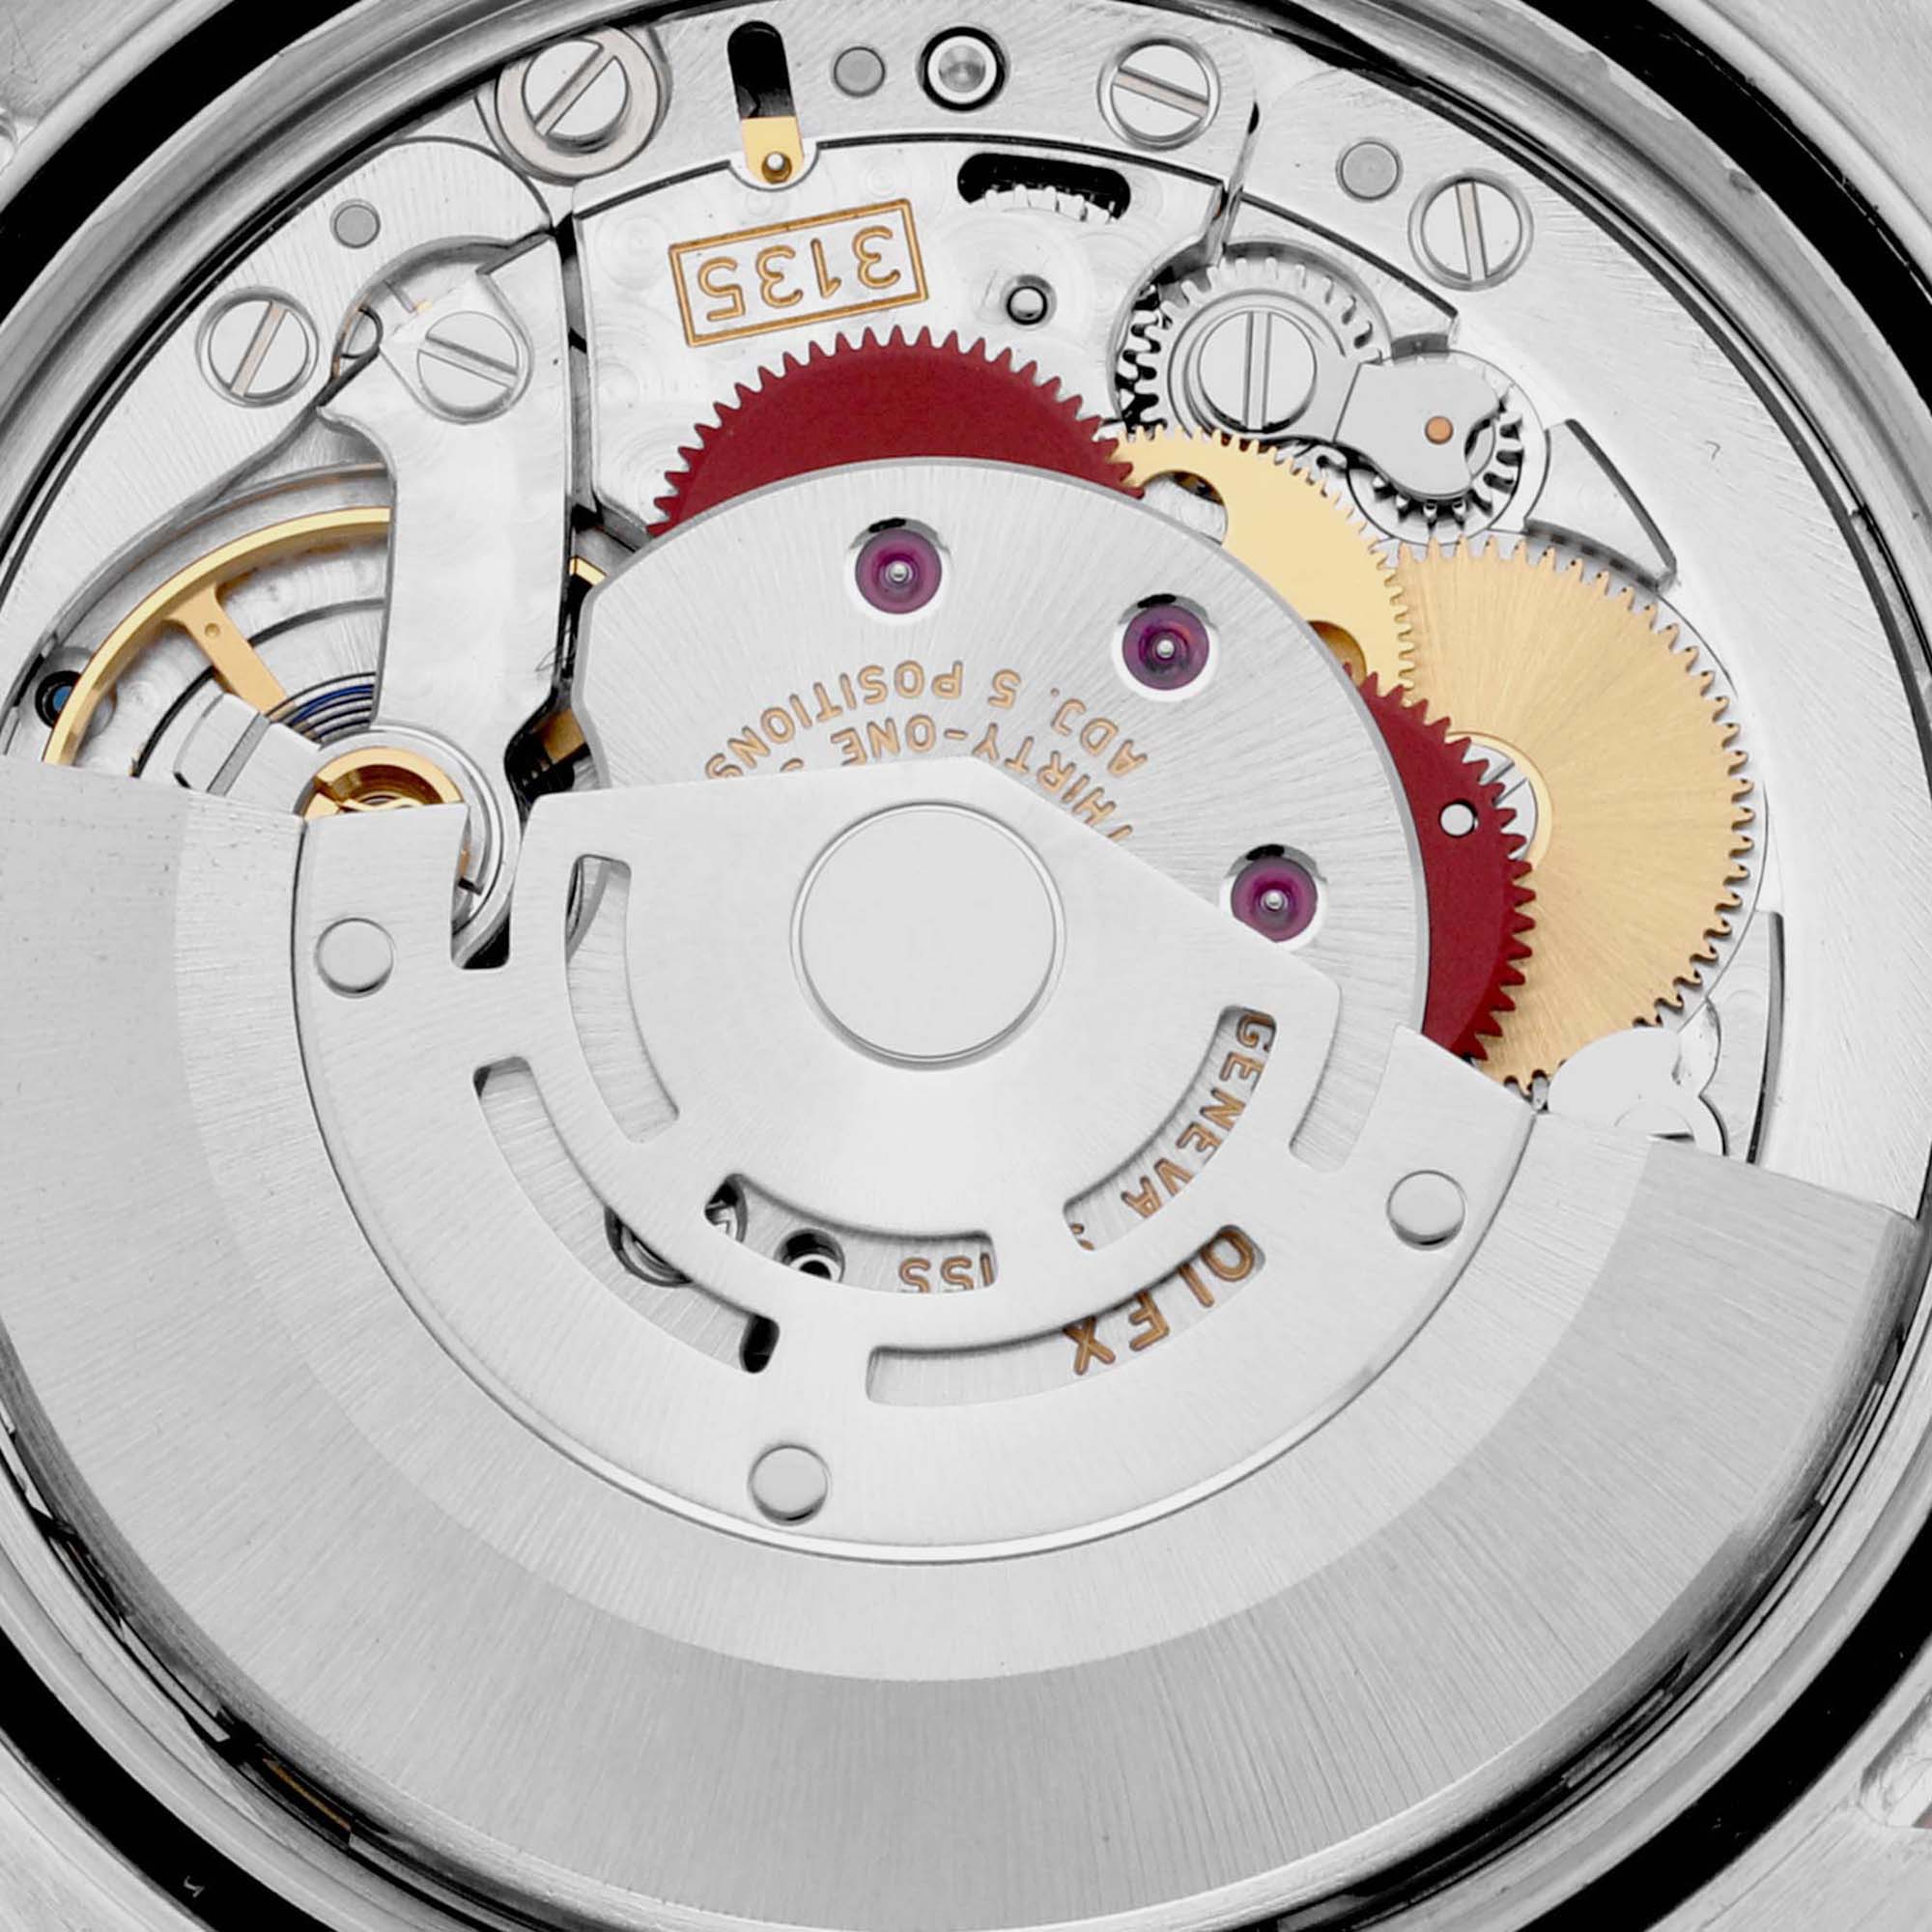 Rolex Datejust Steel Rose Gold Pink Diamond Dial Men's Watch 116231 36 Mm